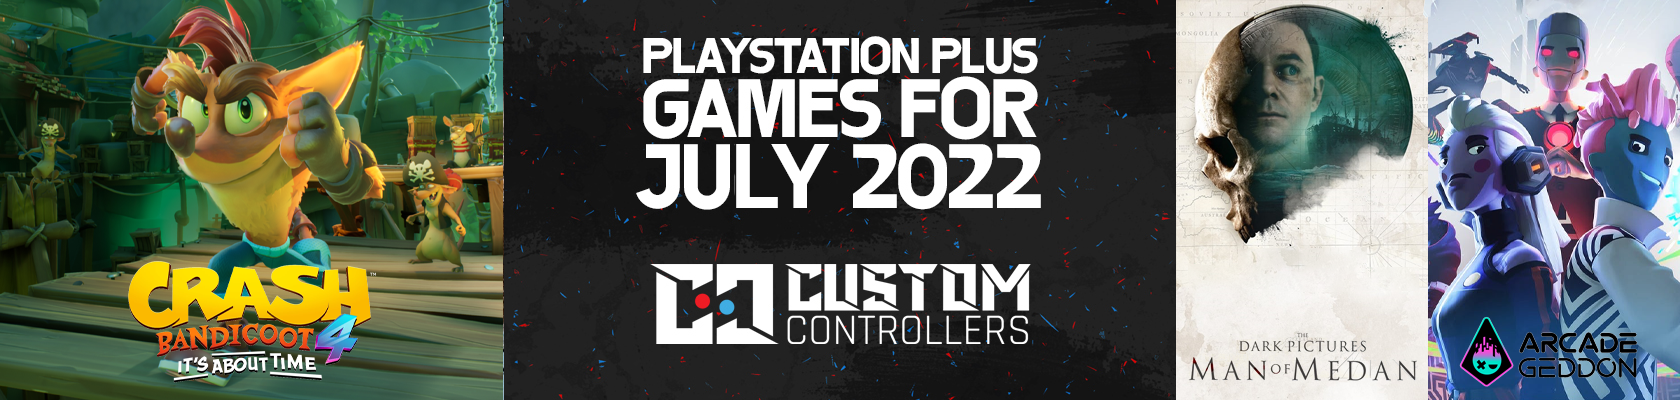 PS Plus Games July 2022-Custom Controllers UK